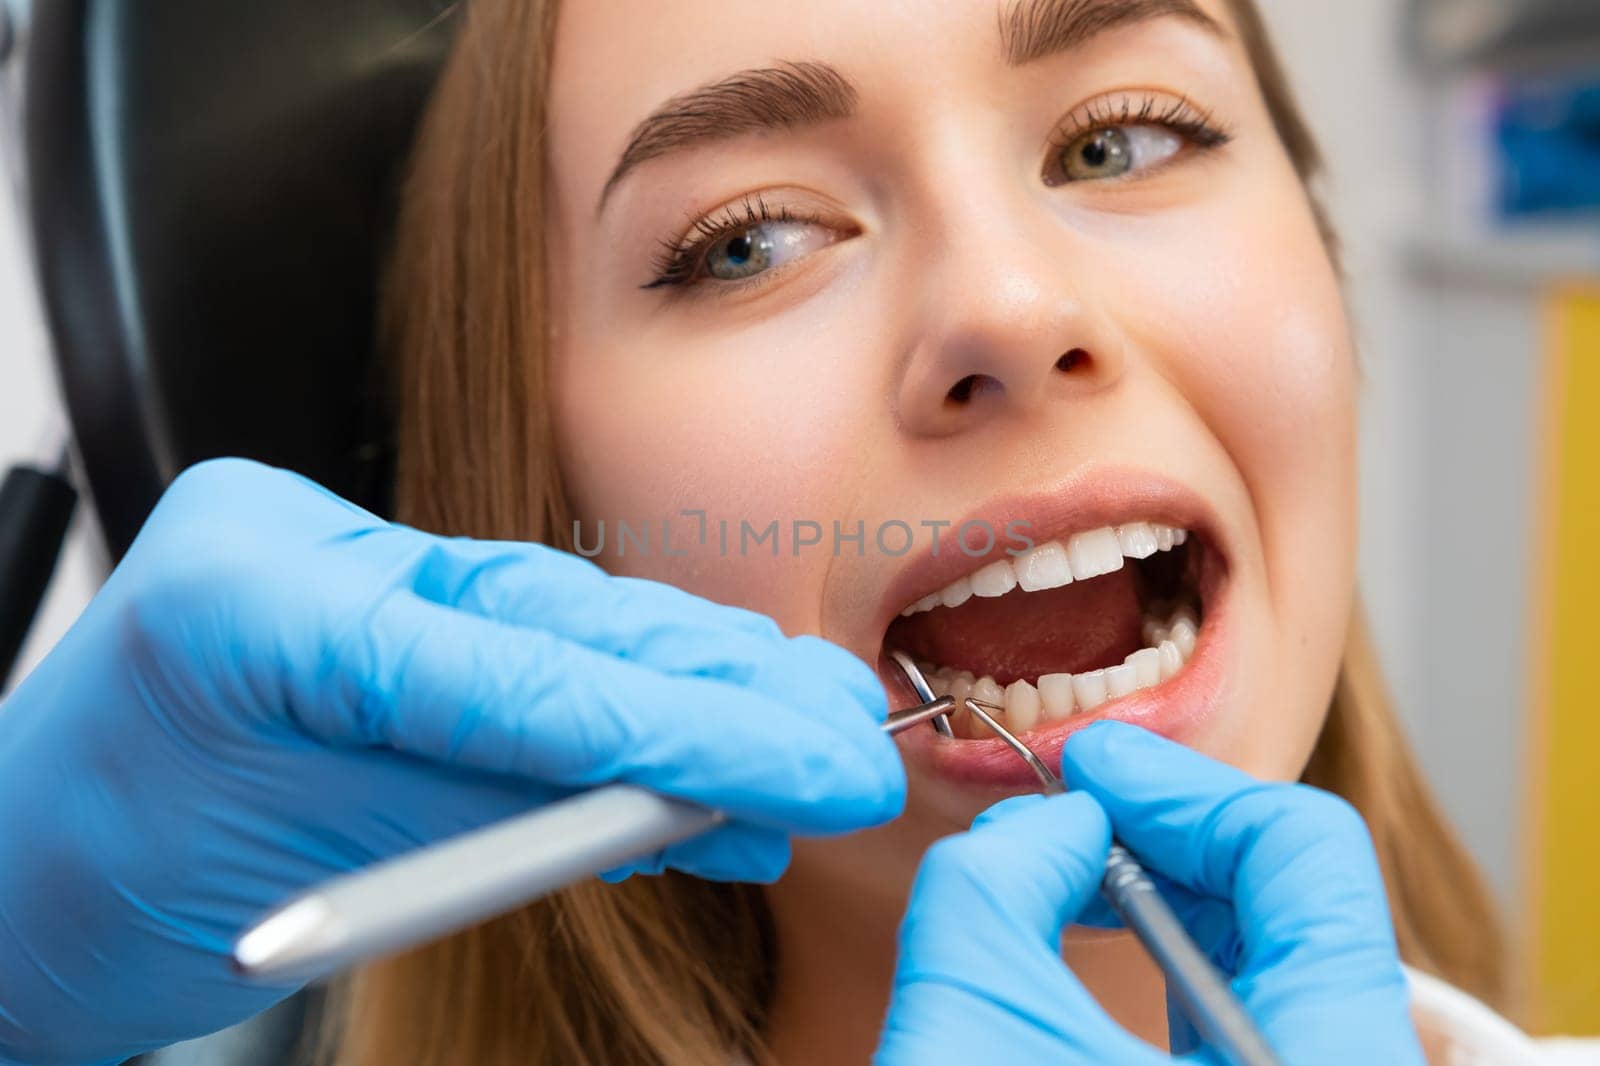 A dentist examining a patients teeth in modern dental clinic by vladimka